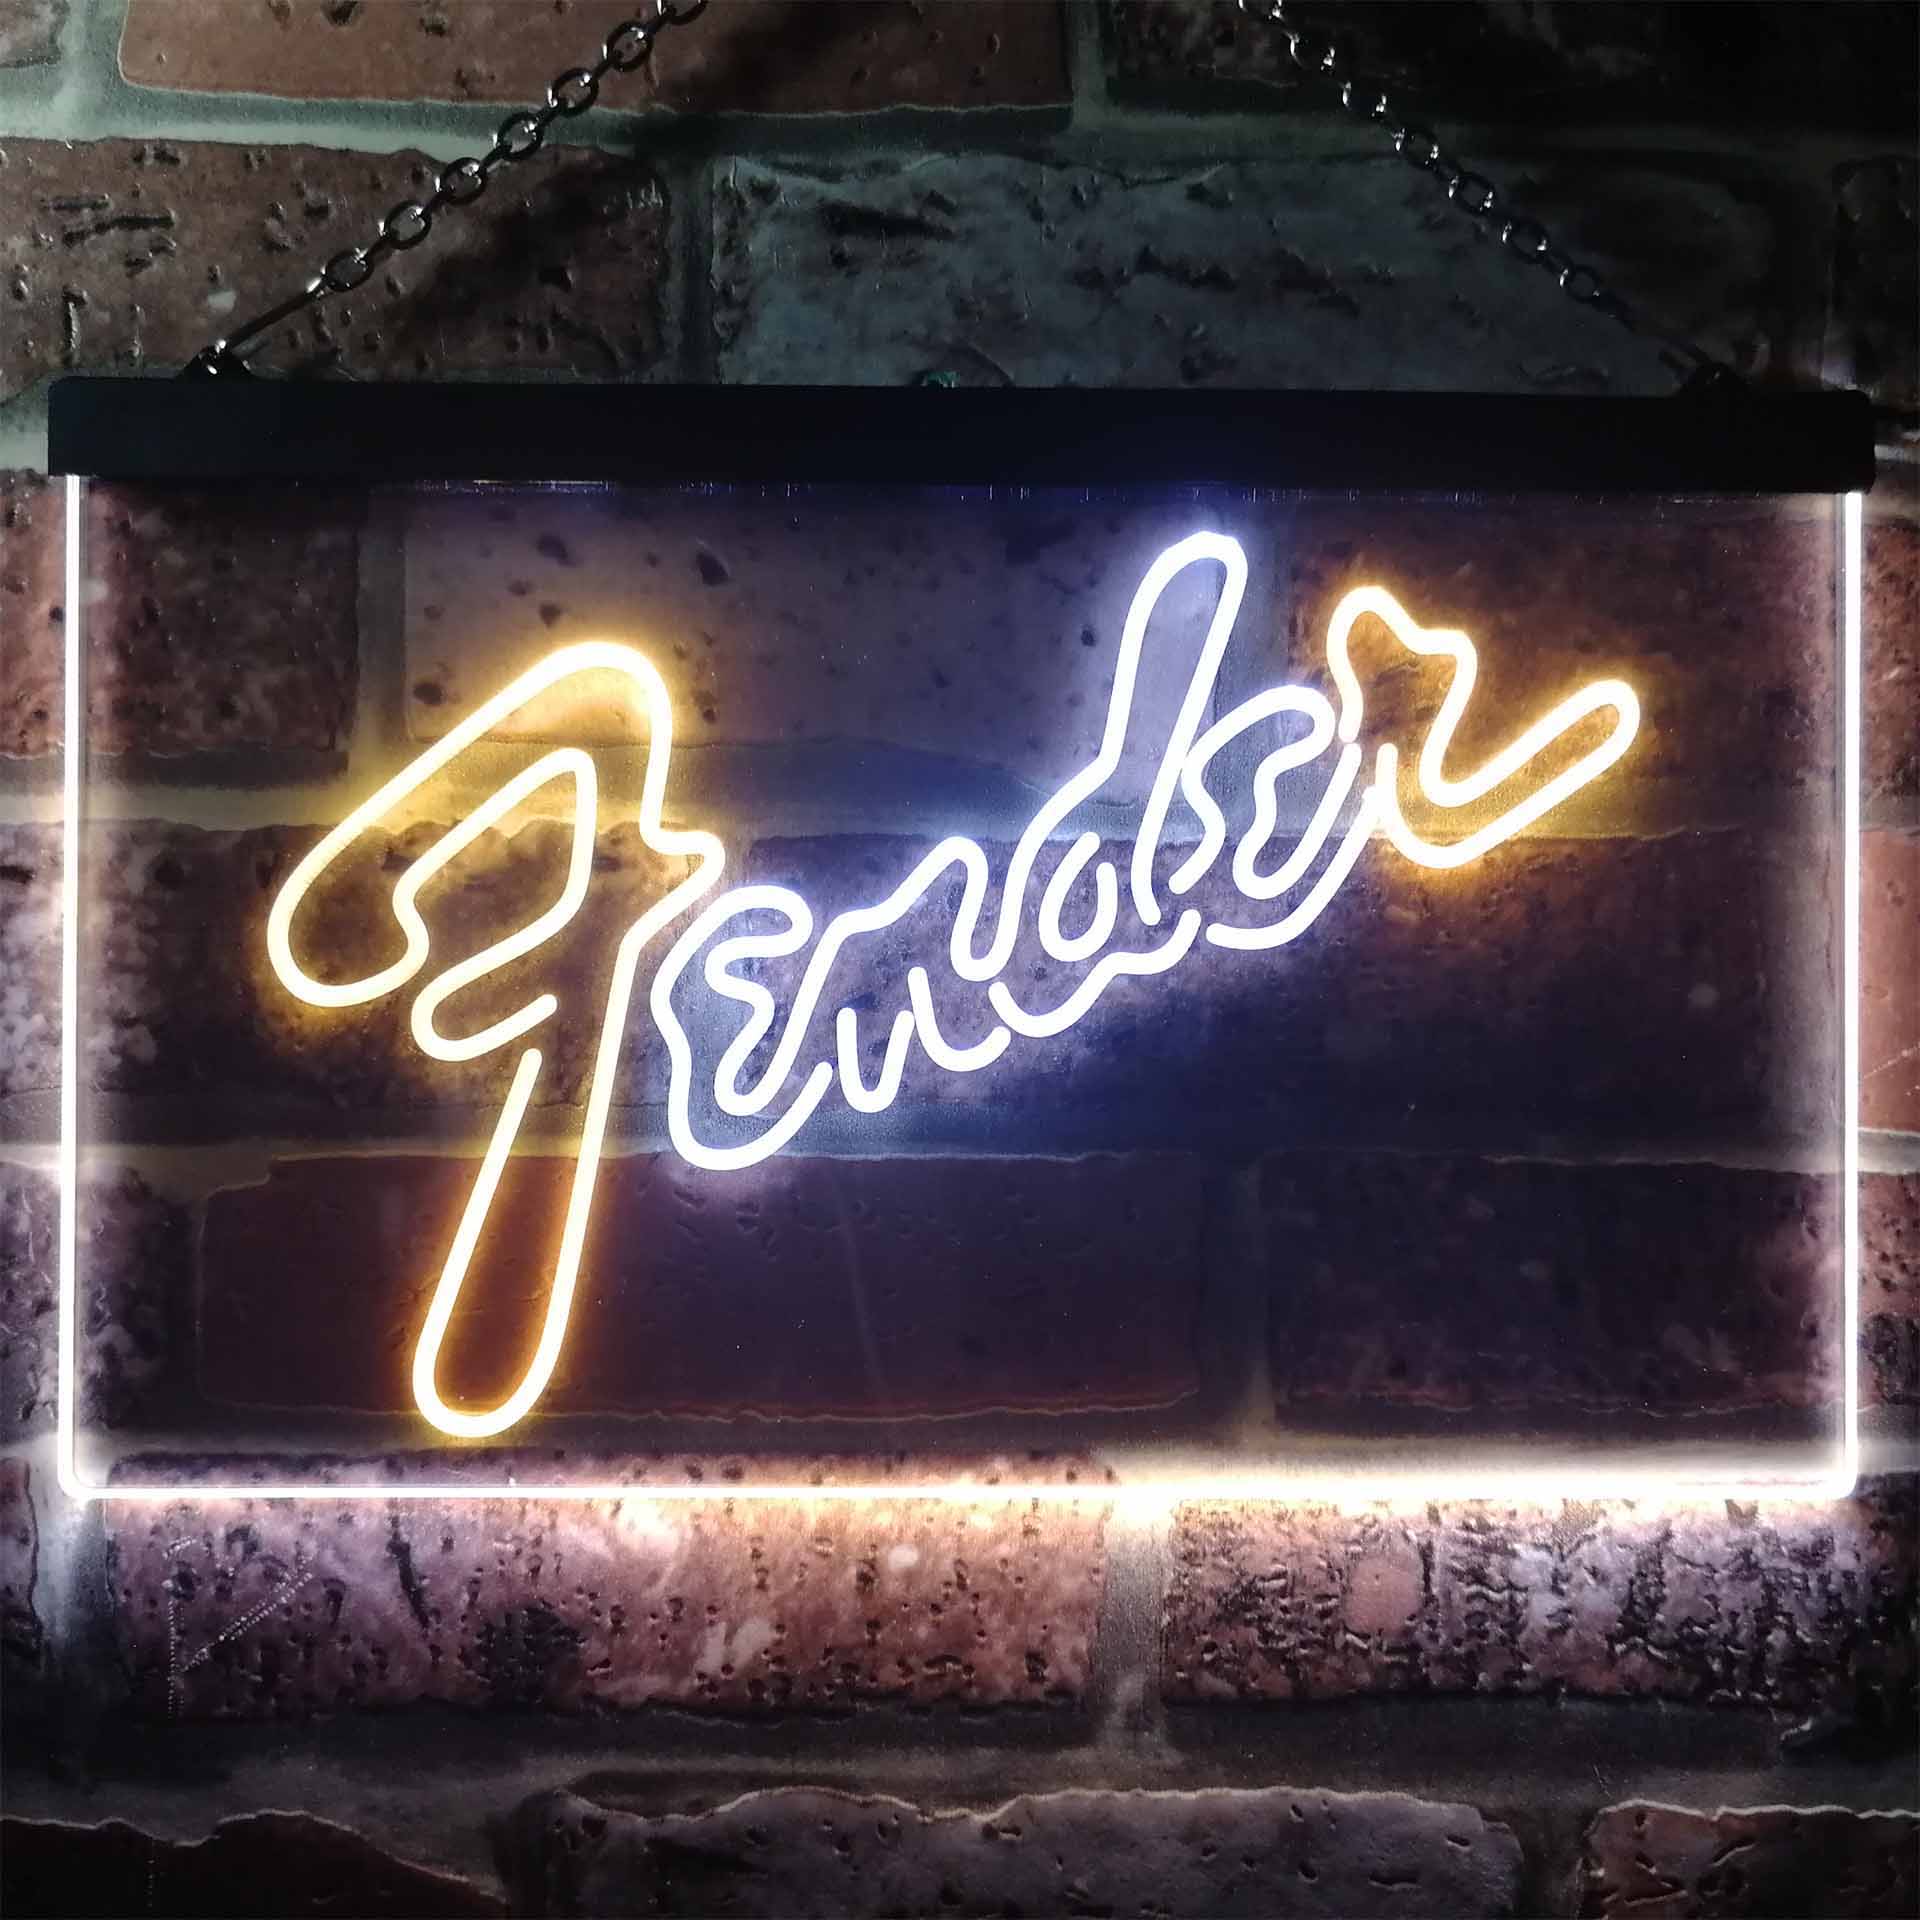 Fender Guitar Neon LED Sign